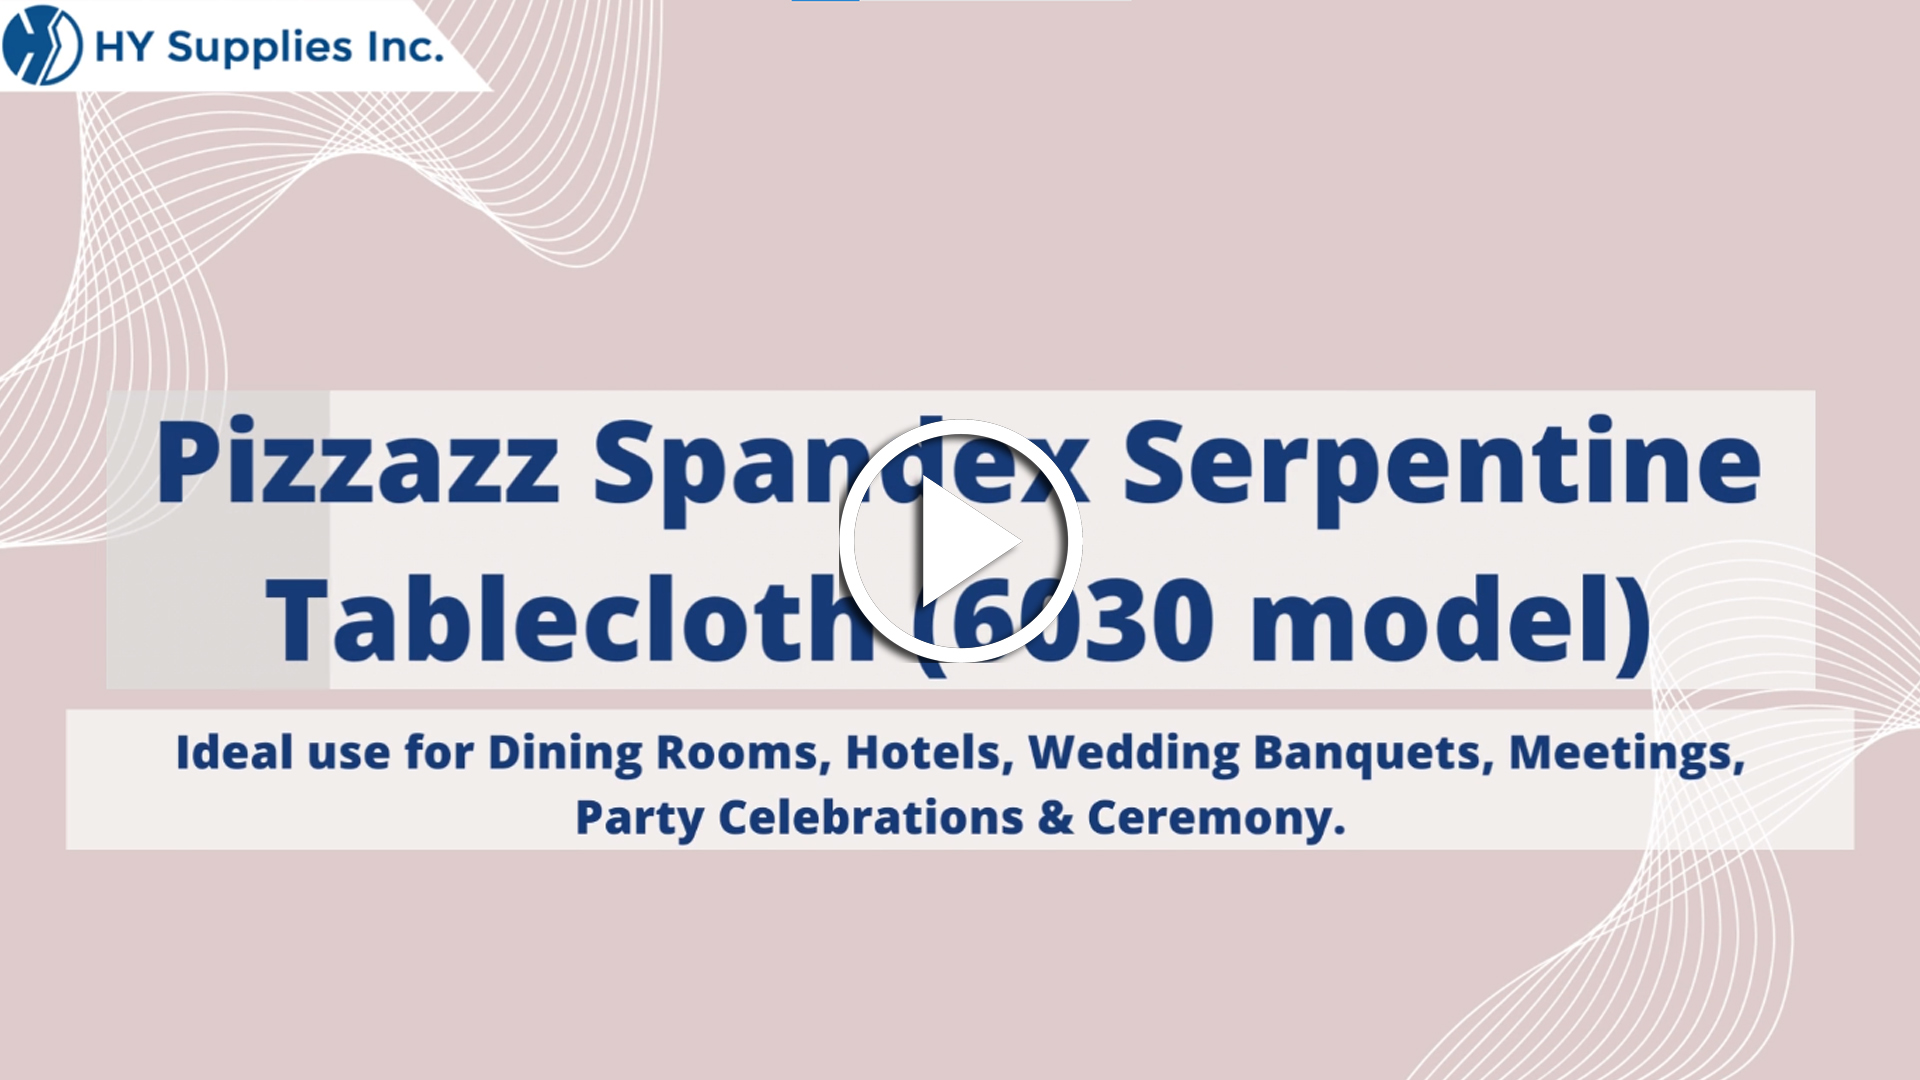 Pizzazz Spandex Serpentine Tablecloth (6030 model)